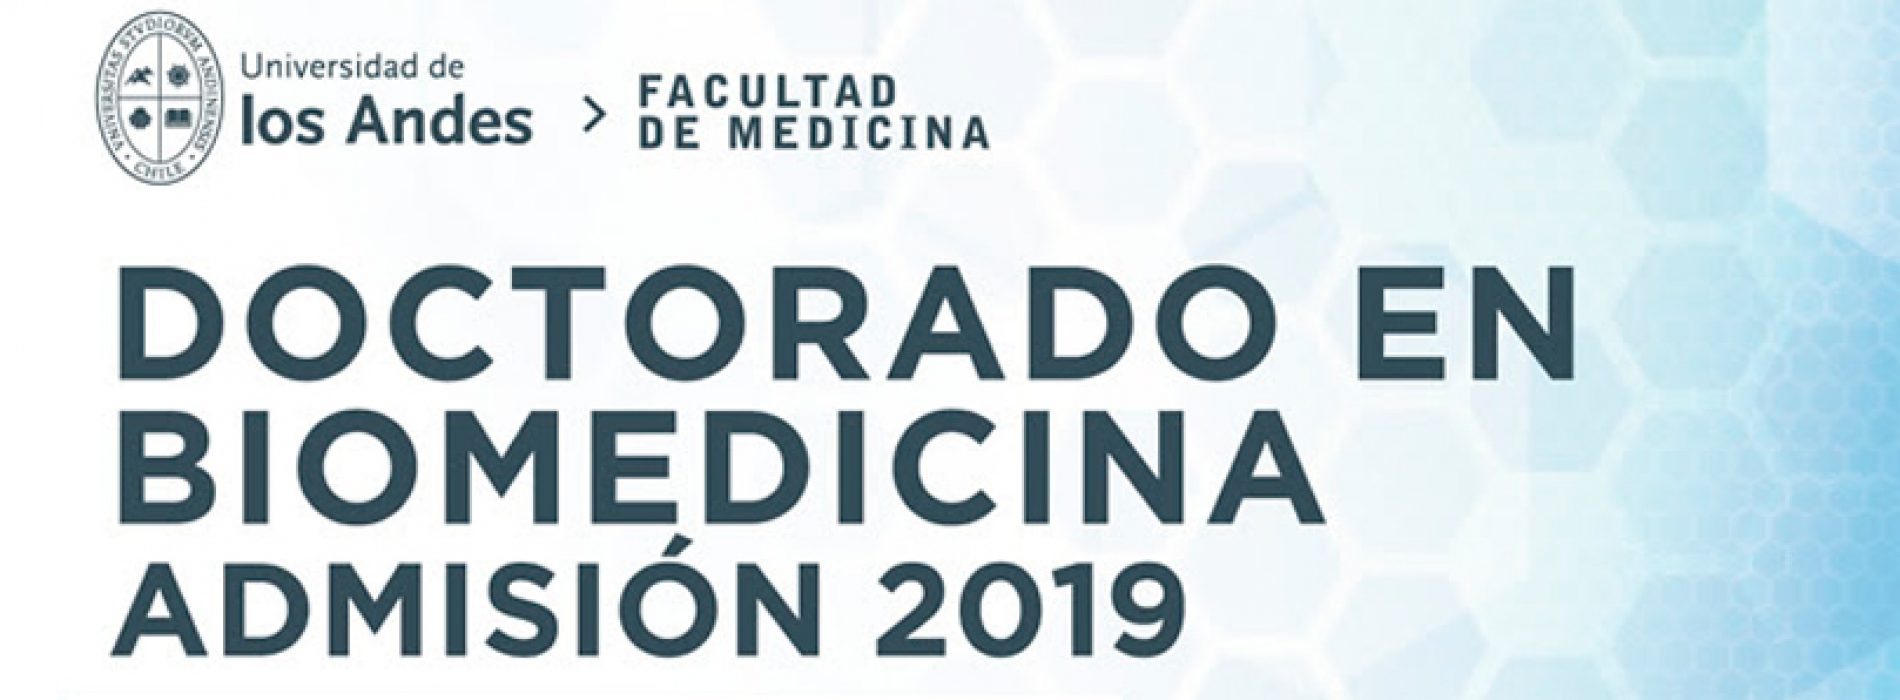 PhD in biomedicine University of los Andes - admission 2019